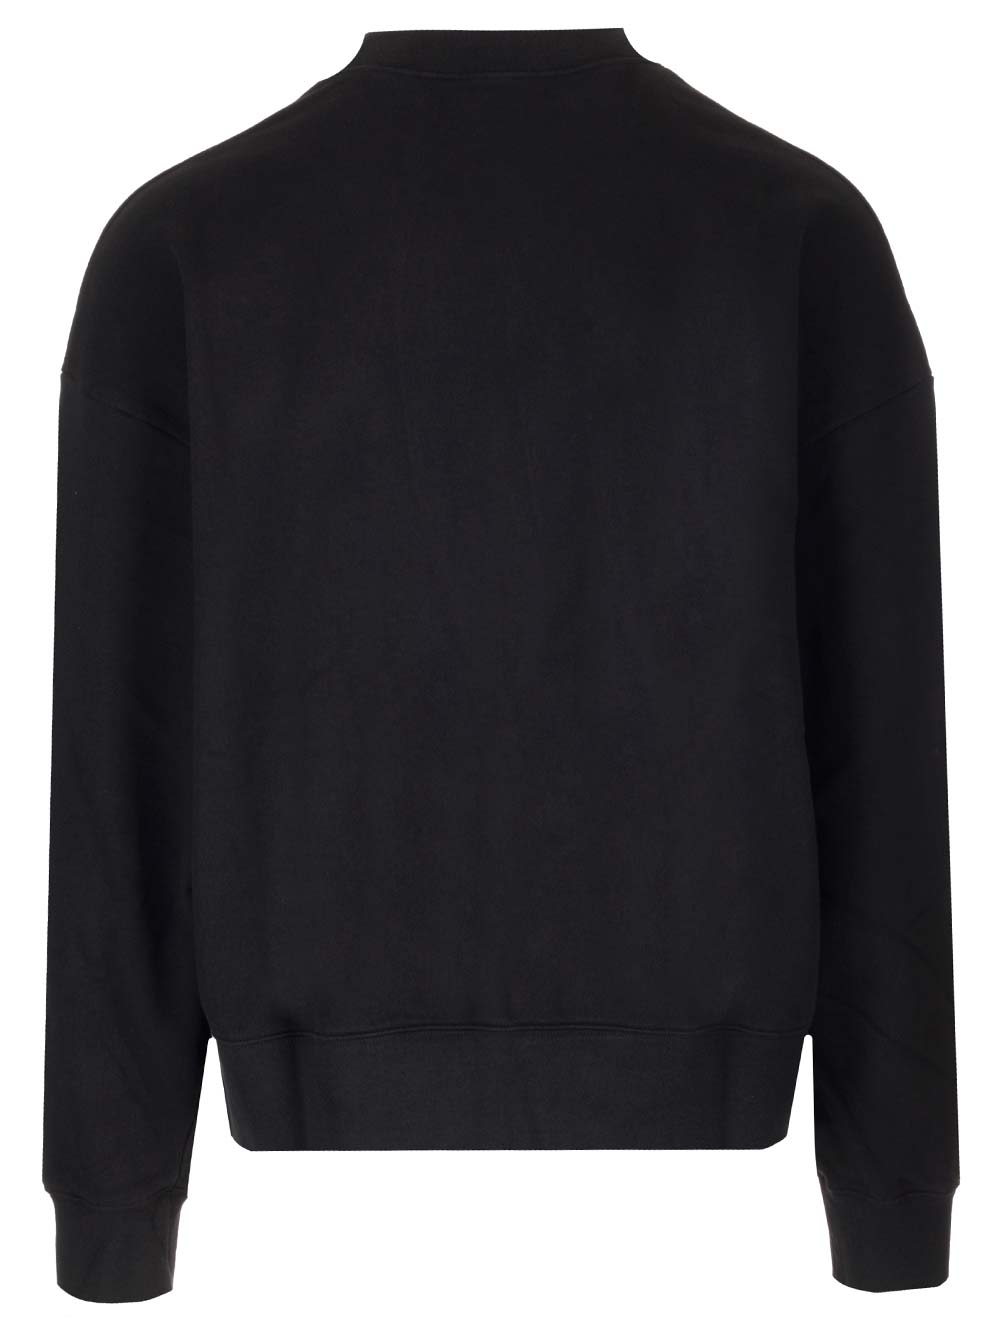 Shop Palm Angels Crewneck Sweatshirt In Black